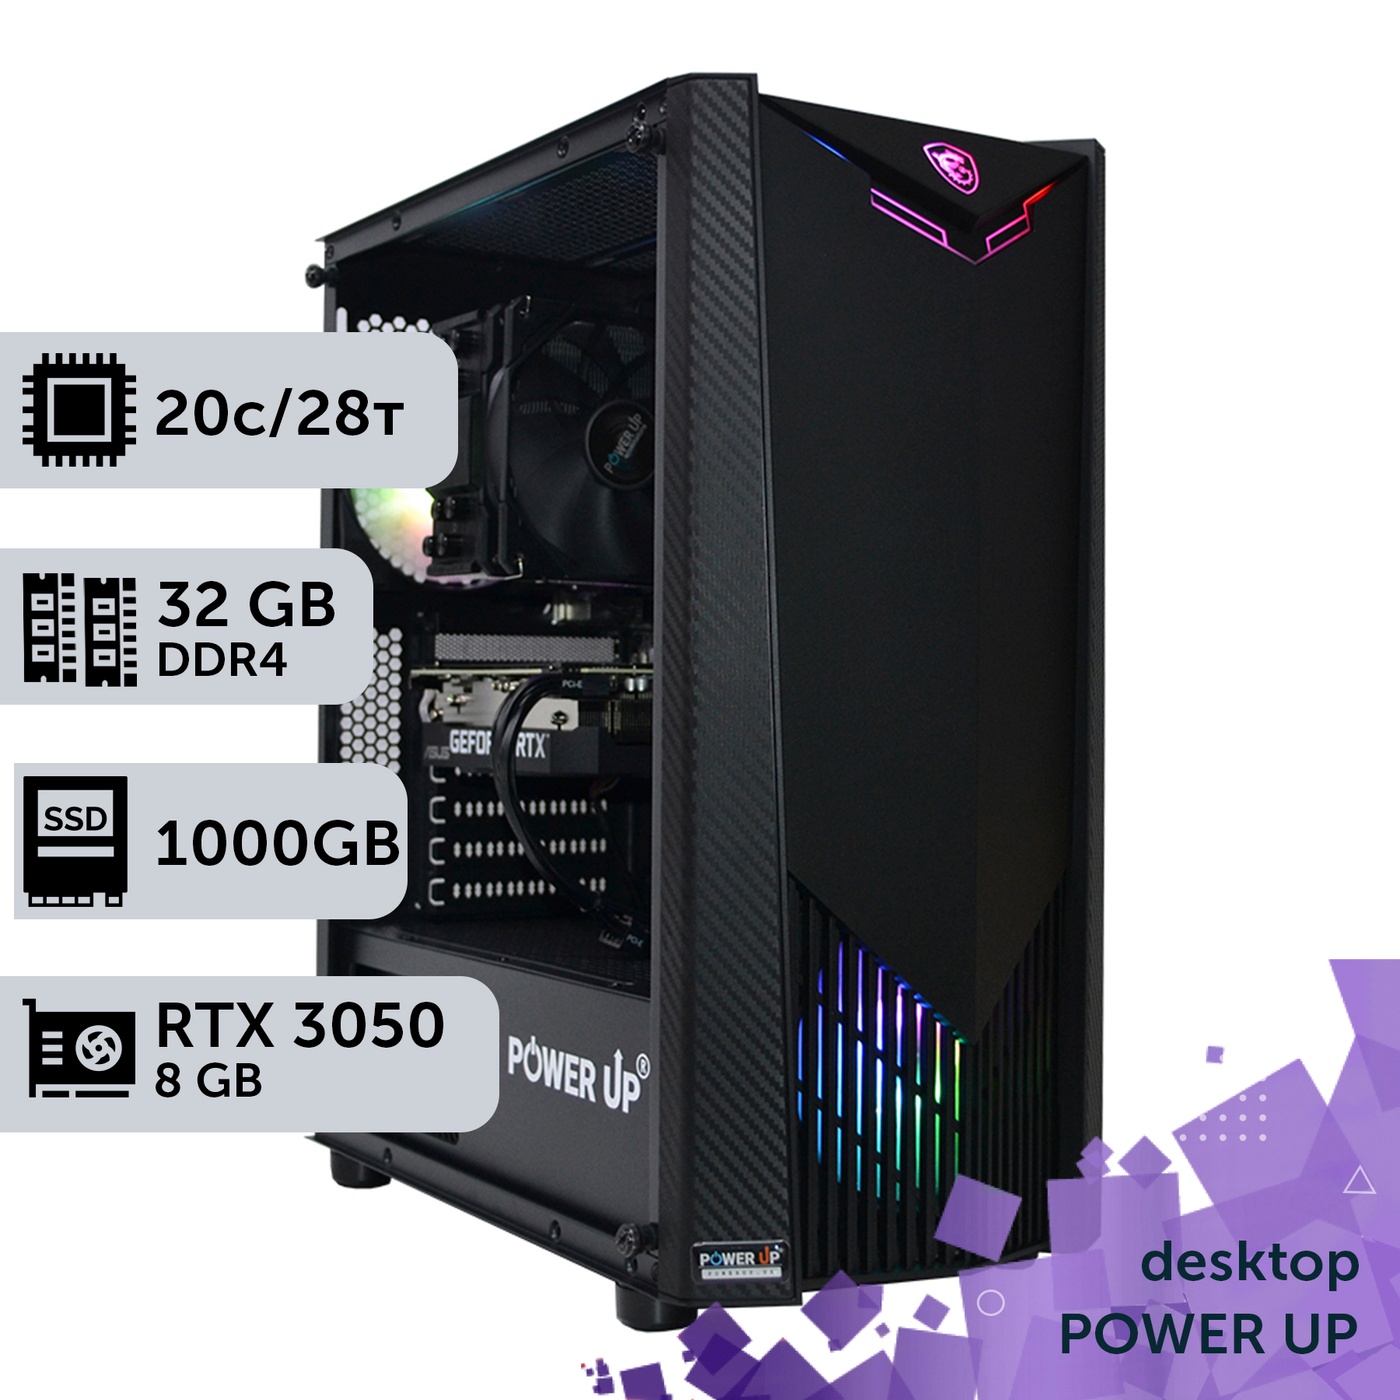 Рабочая станция PowerUp Desktop #312 Core i7 14700K/32 GB/SSD 1TB/GeForce RTX 3050 8GB